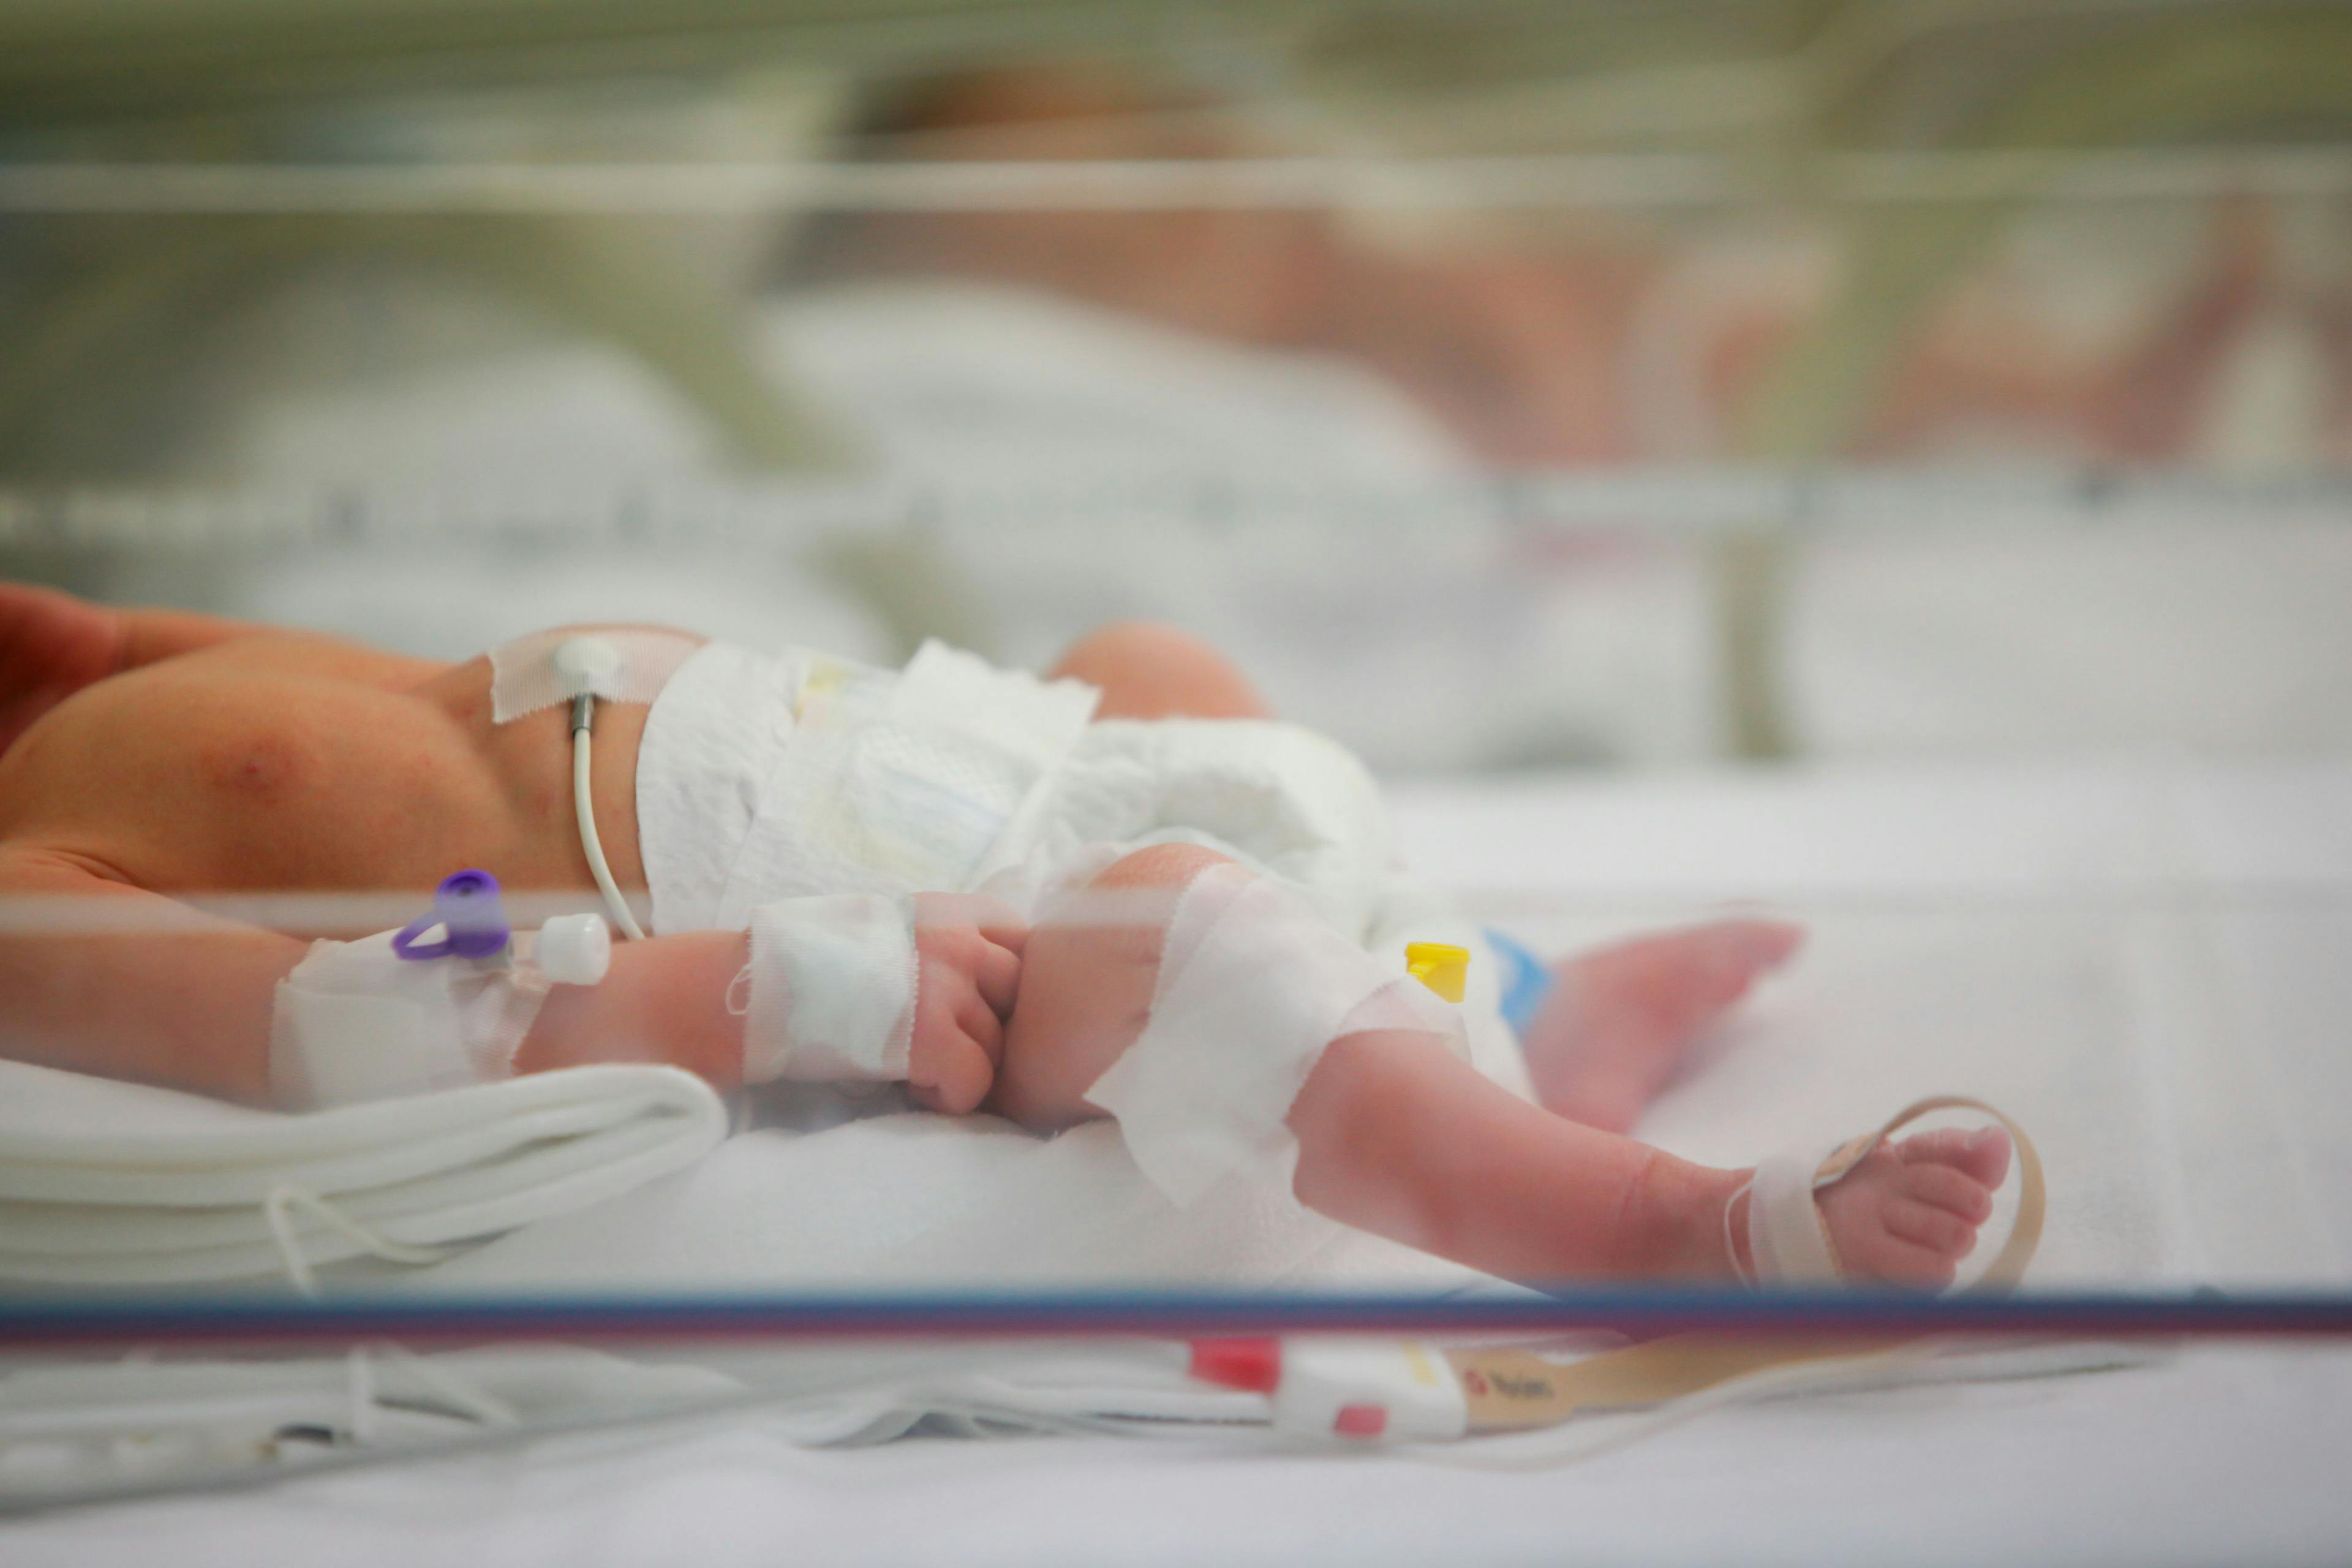 Outcomes of meningitis in infants born preterm